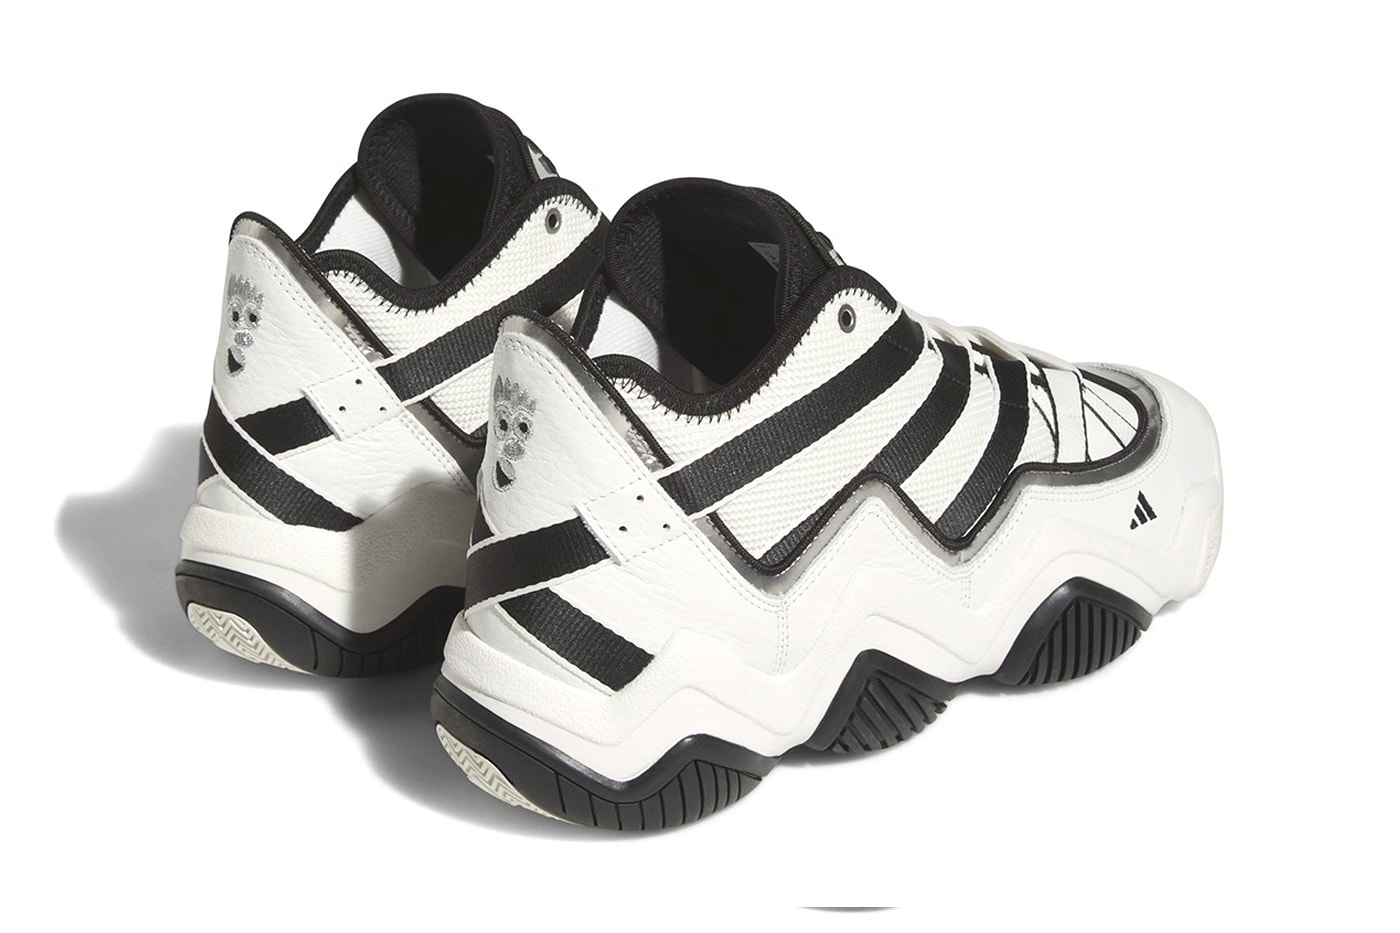 adidas Basketball Top Ten Kobe Bryant rooke shoes 3 stripe 2010 lakers black white release info date price